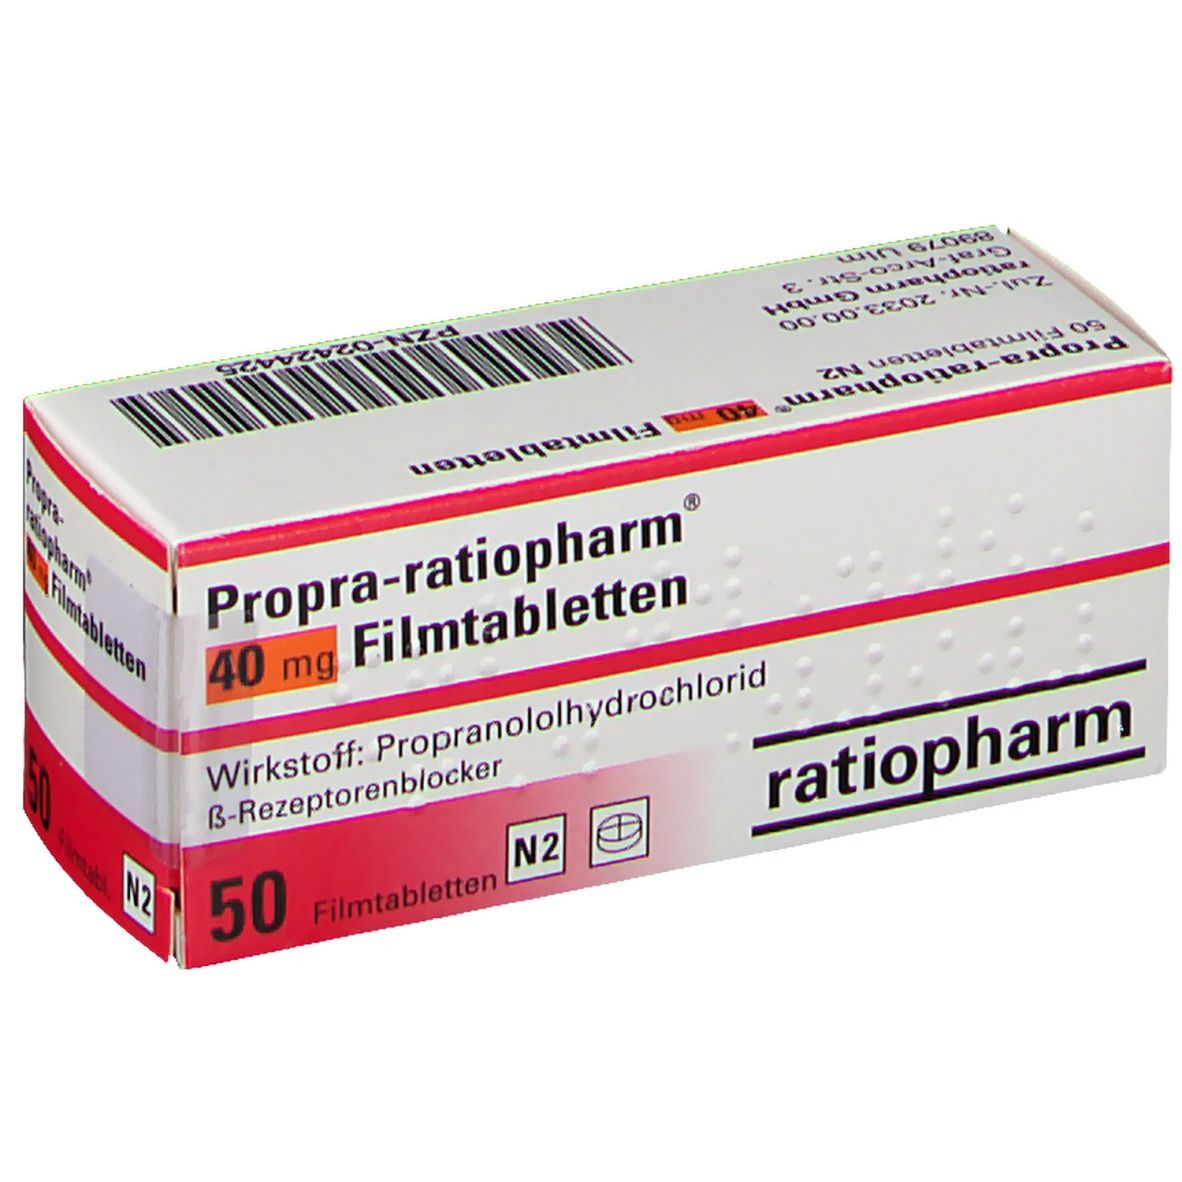 Propra-ratiopharm® 40 mg